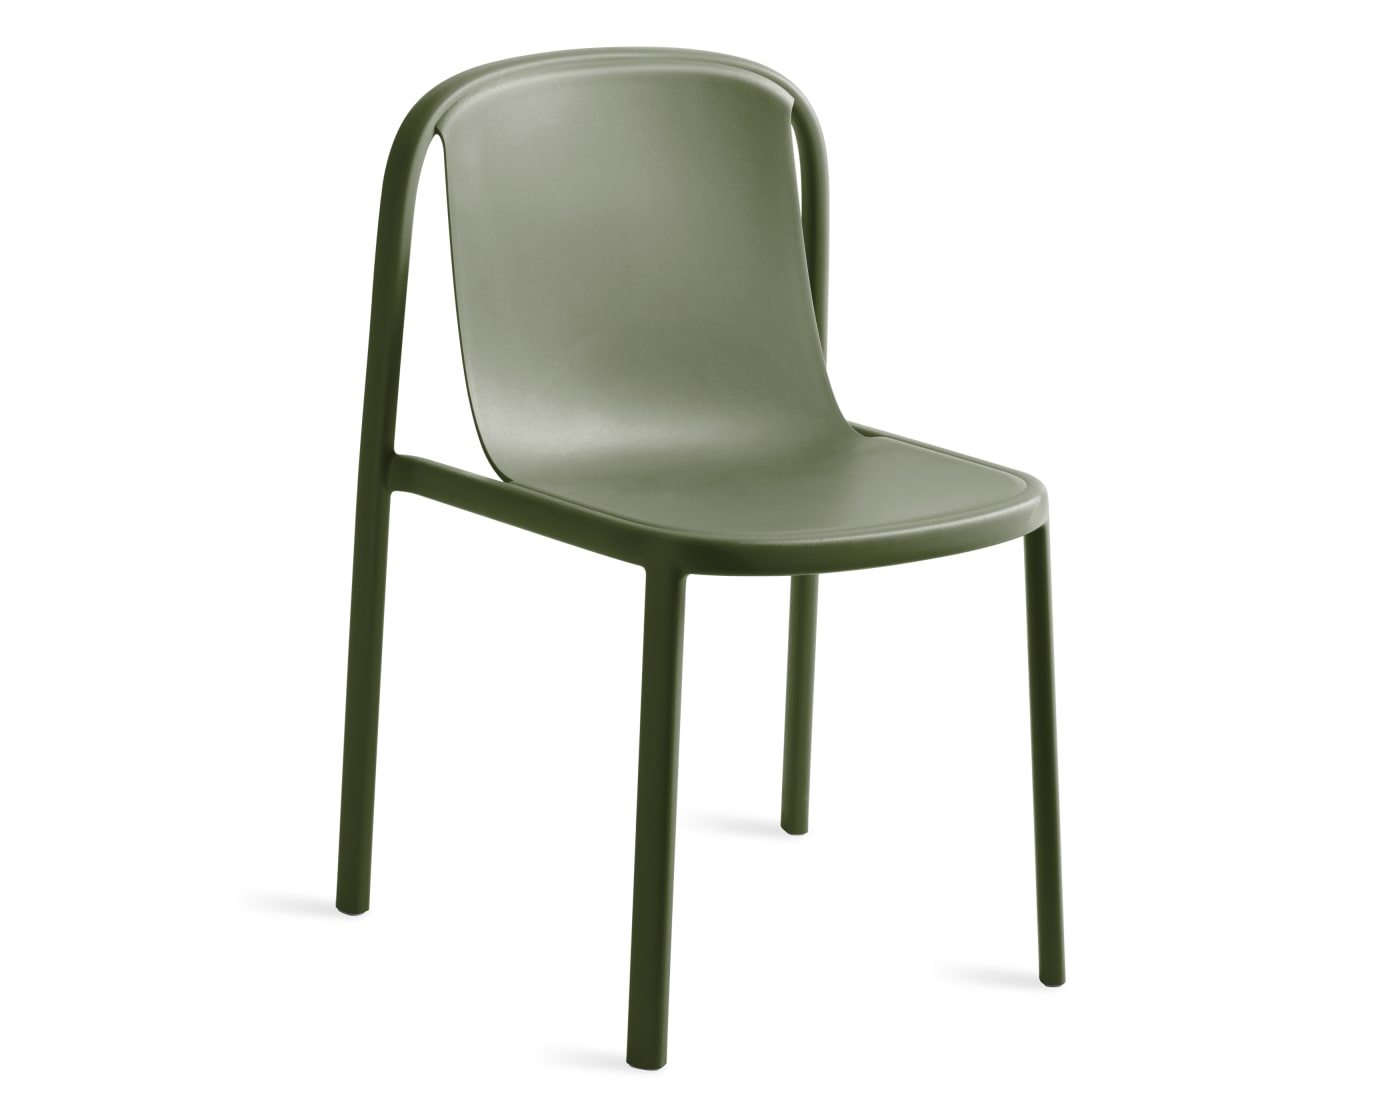 Bludot Decade Chair design